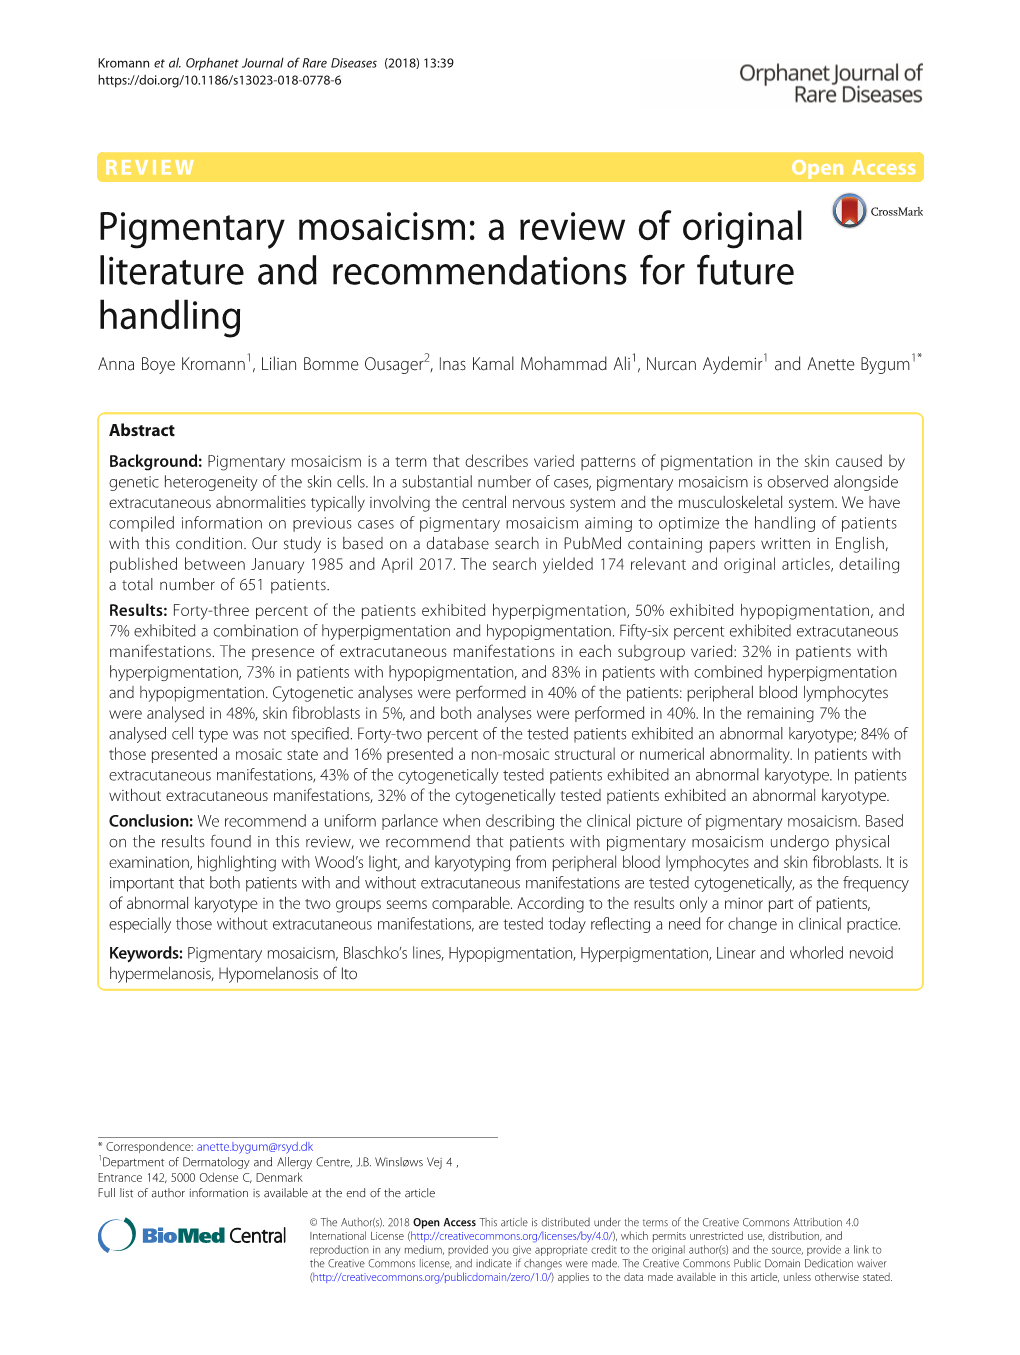 Pigmentary Mosaicism: a Review of Original Literature And